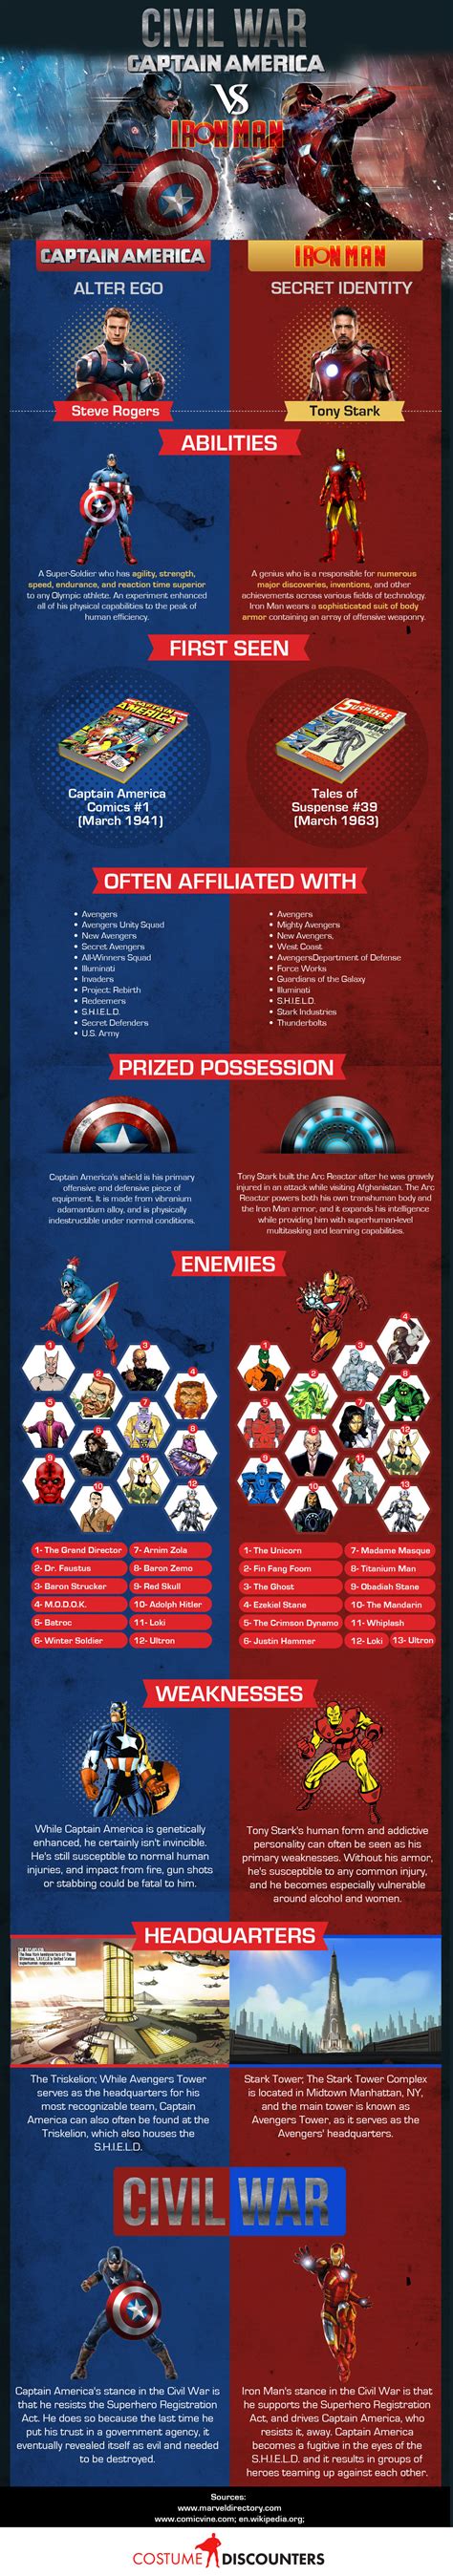 Captain America Civil War Infographic